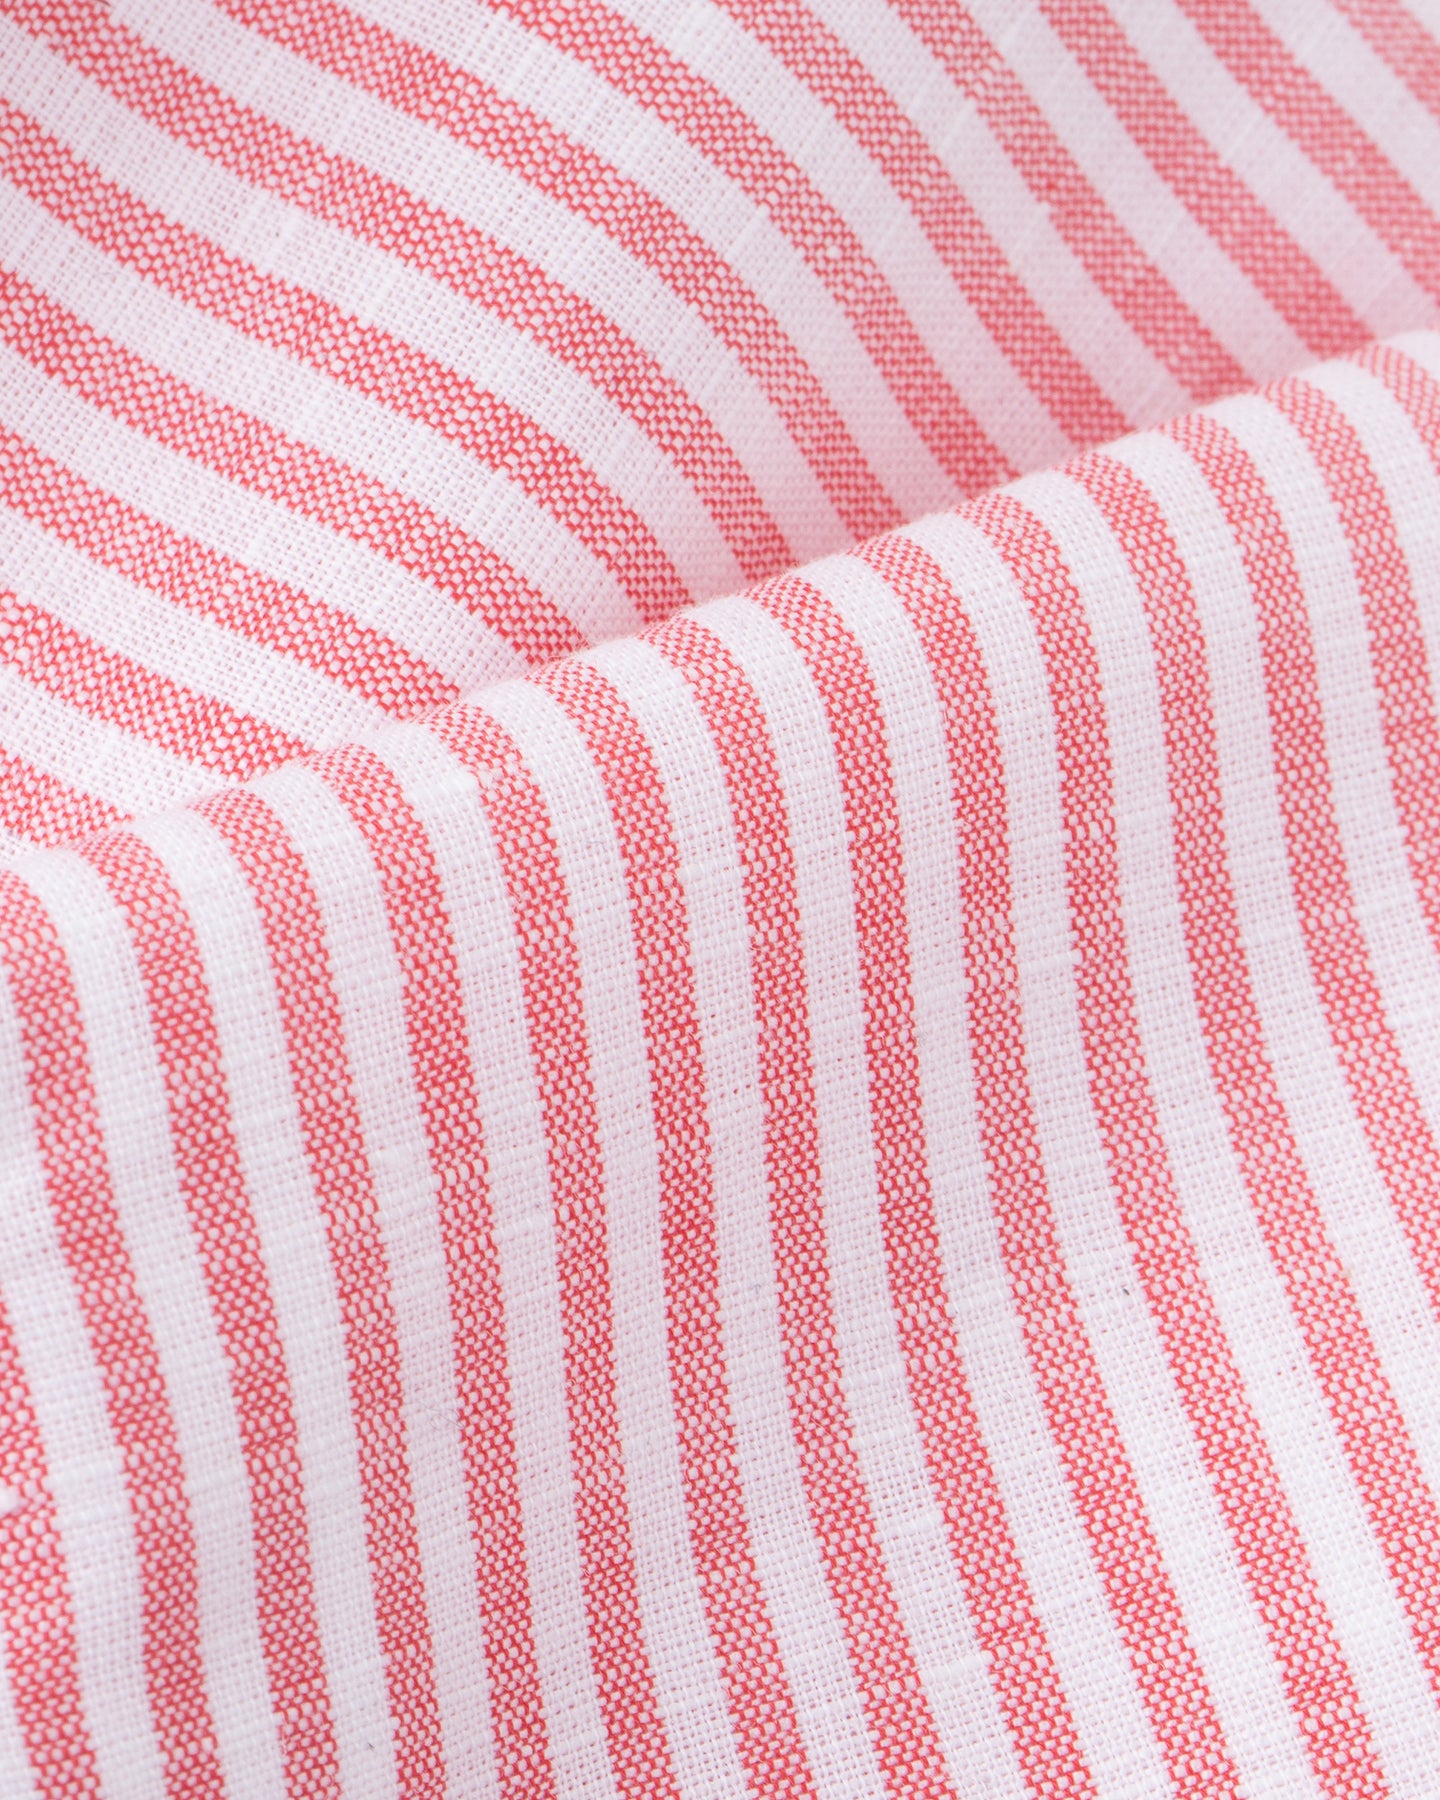 Red bengal stripe cotton linen shirt fabric